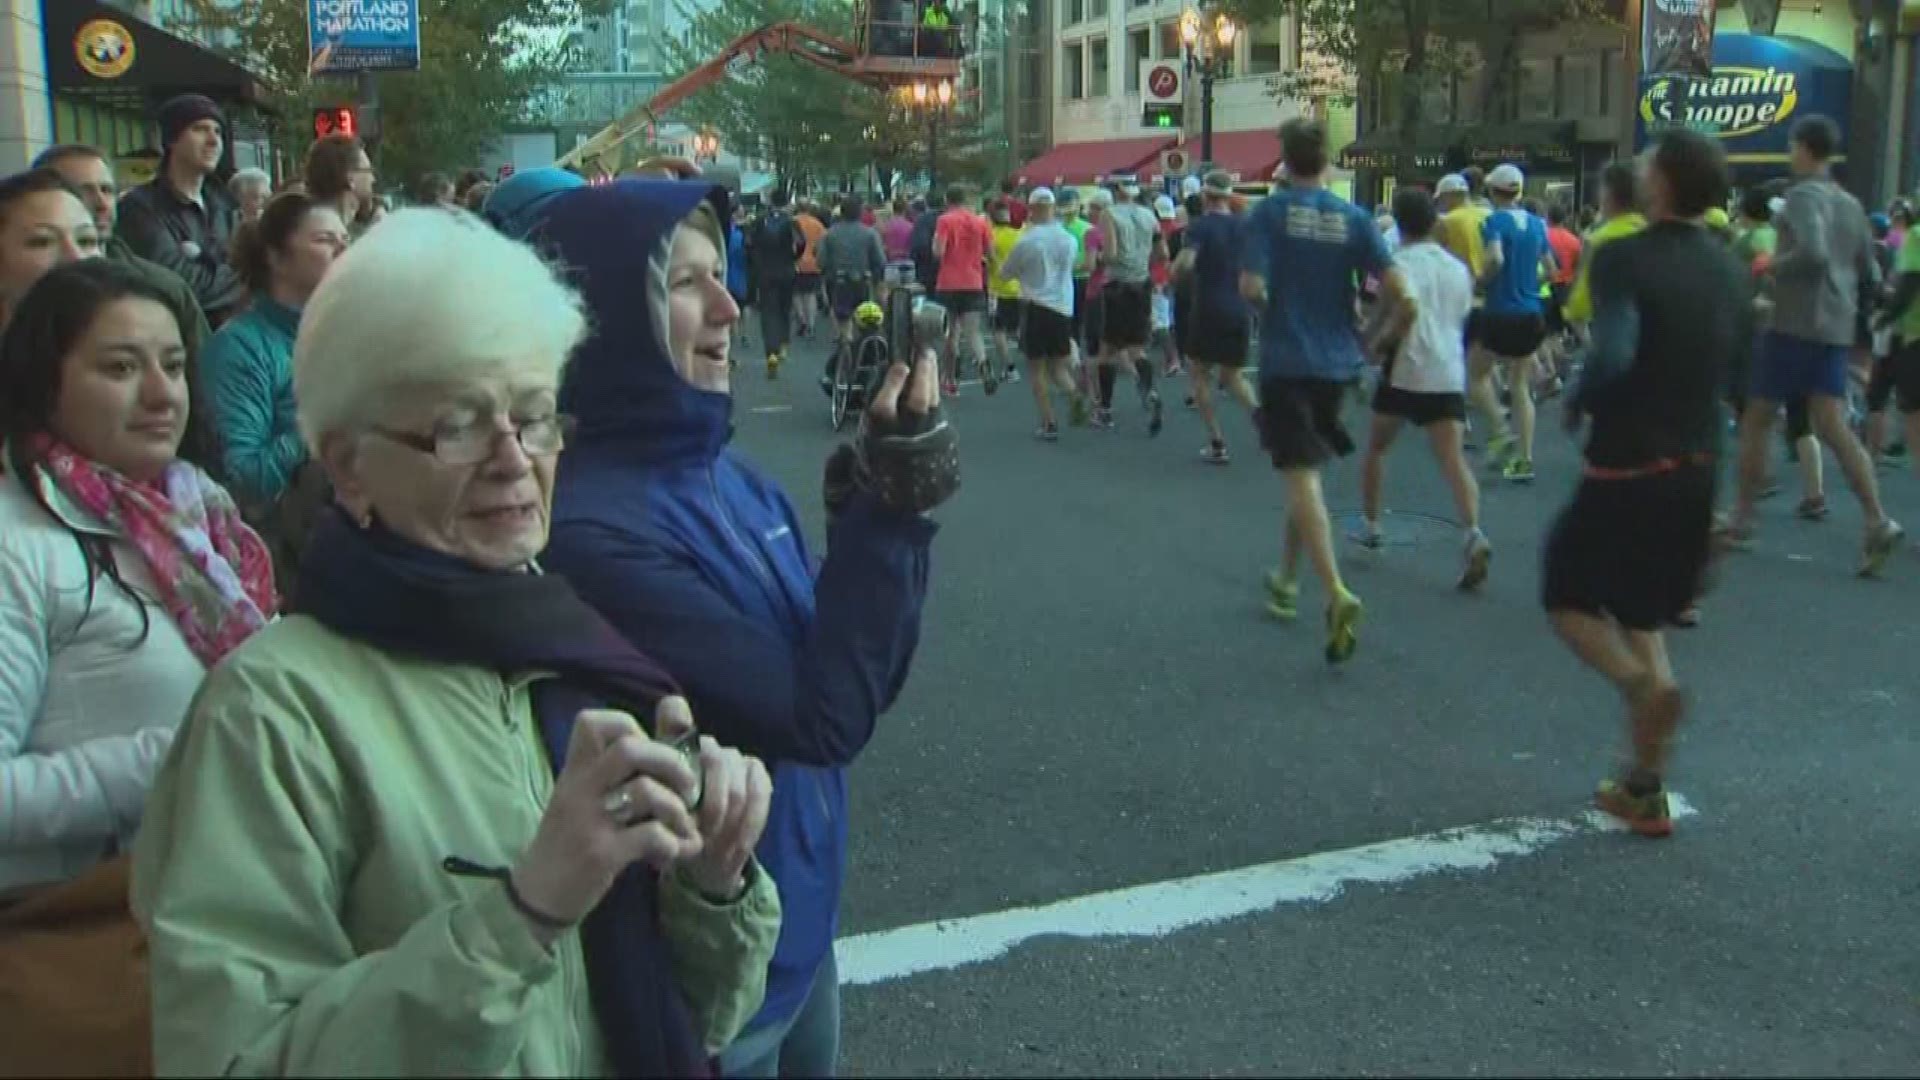 Portland Marathon under DOJ scrutiny